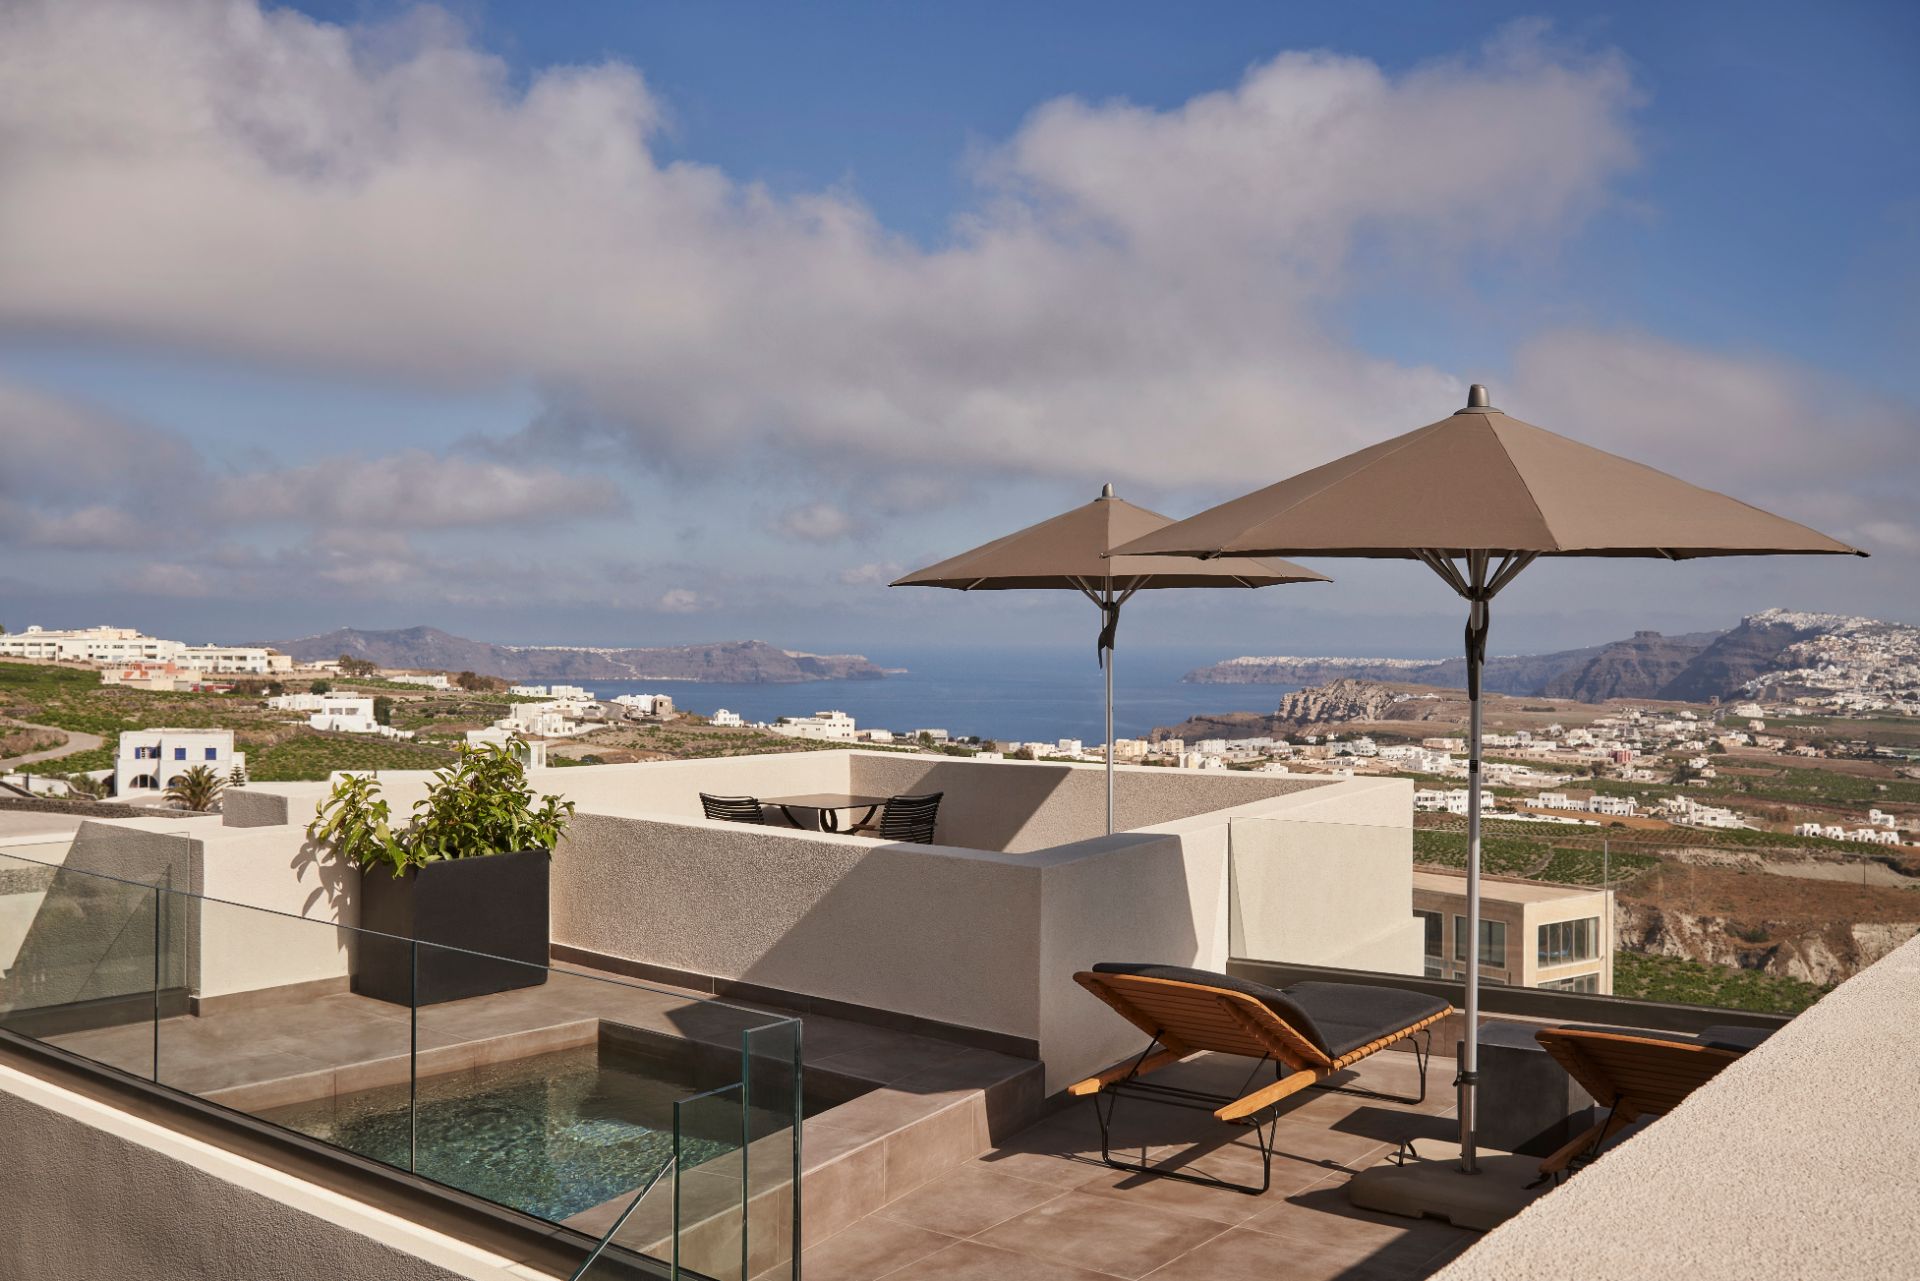 Apikia-Santorini-Suite-Outdoor-Hot-Tub-Panoramic-View-3